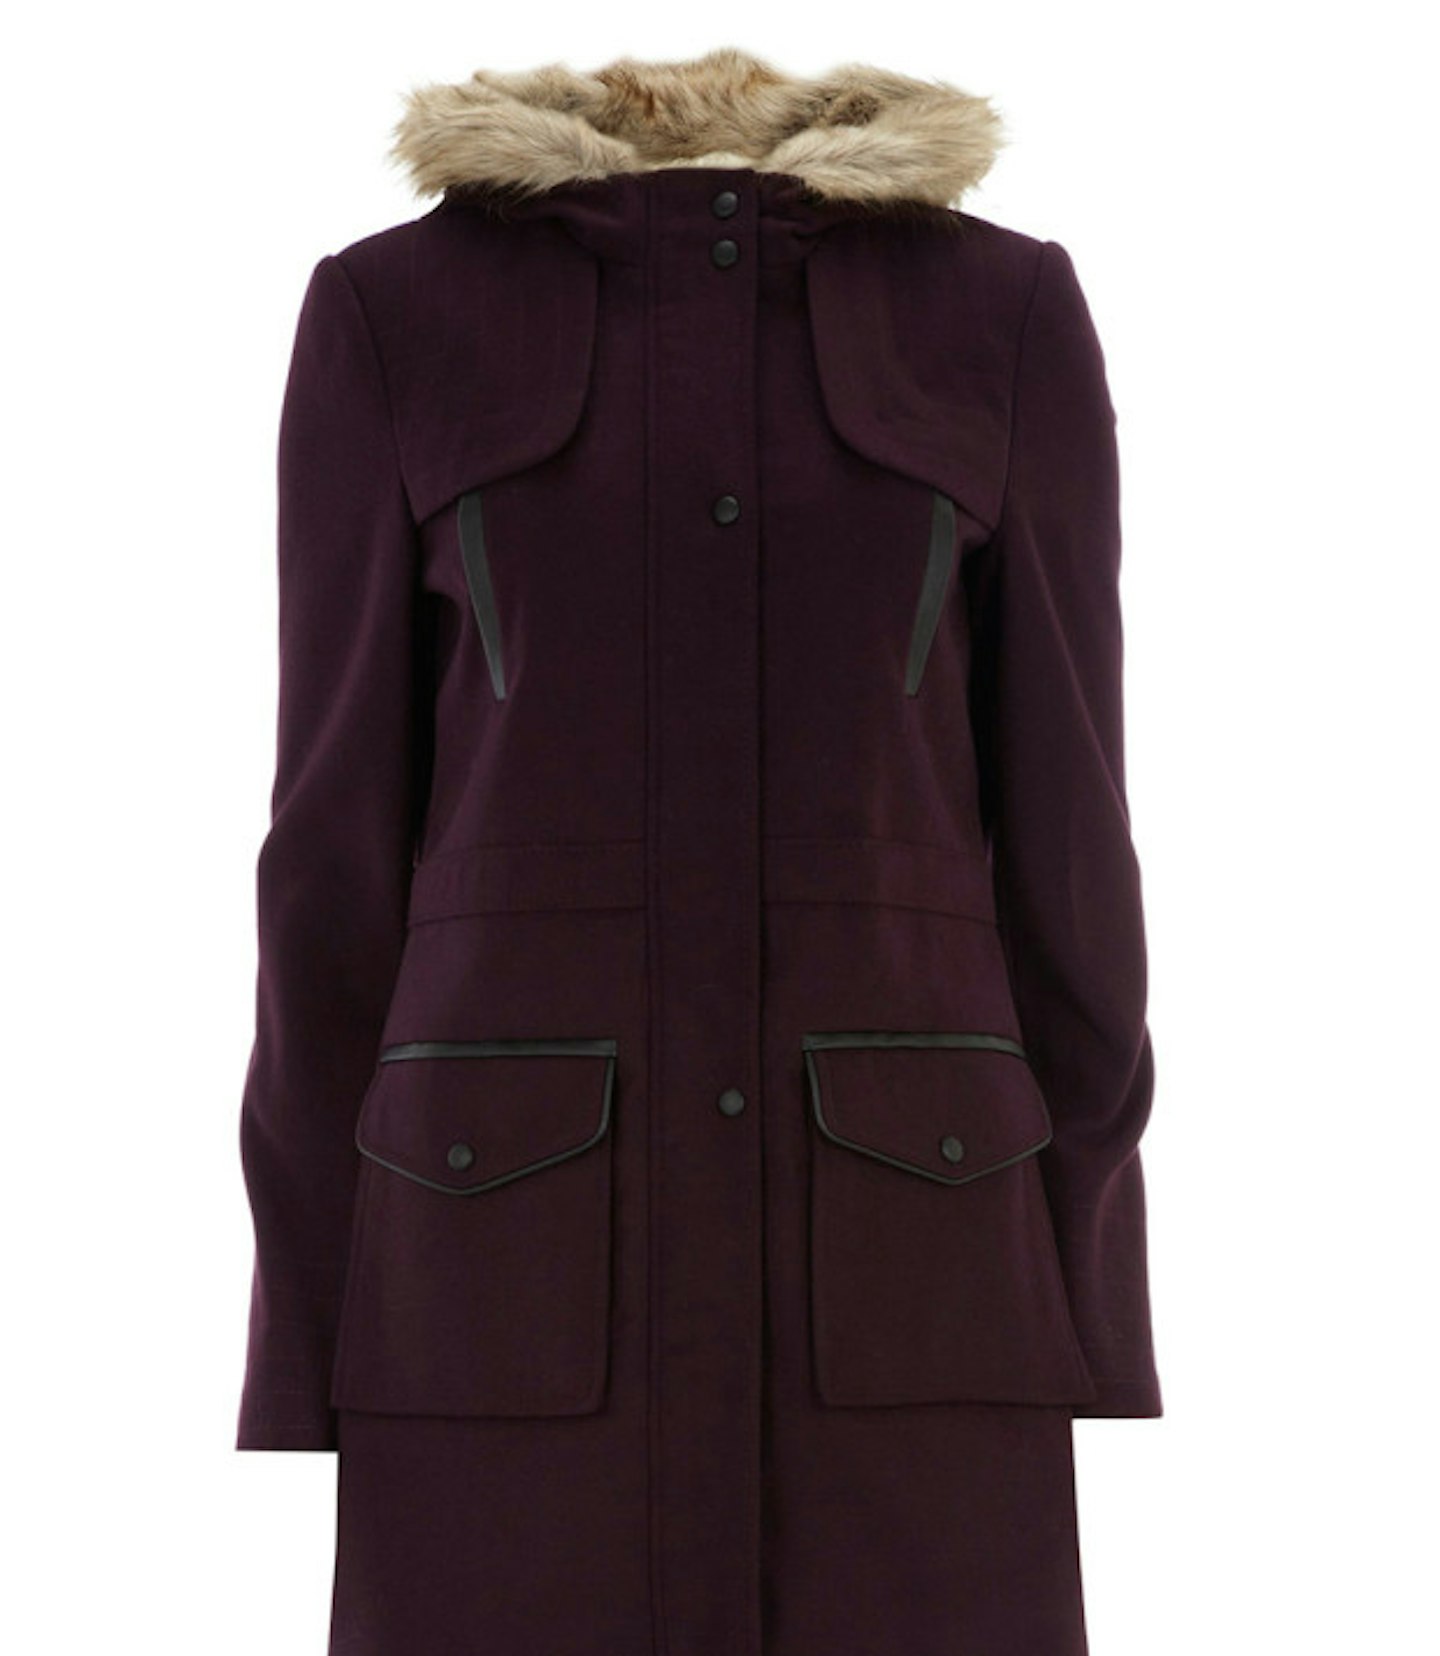 Plum duffle coat with fur hood